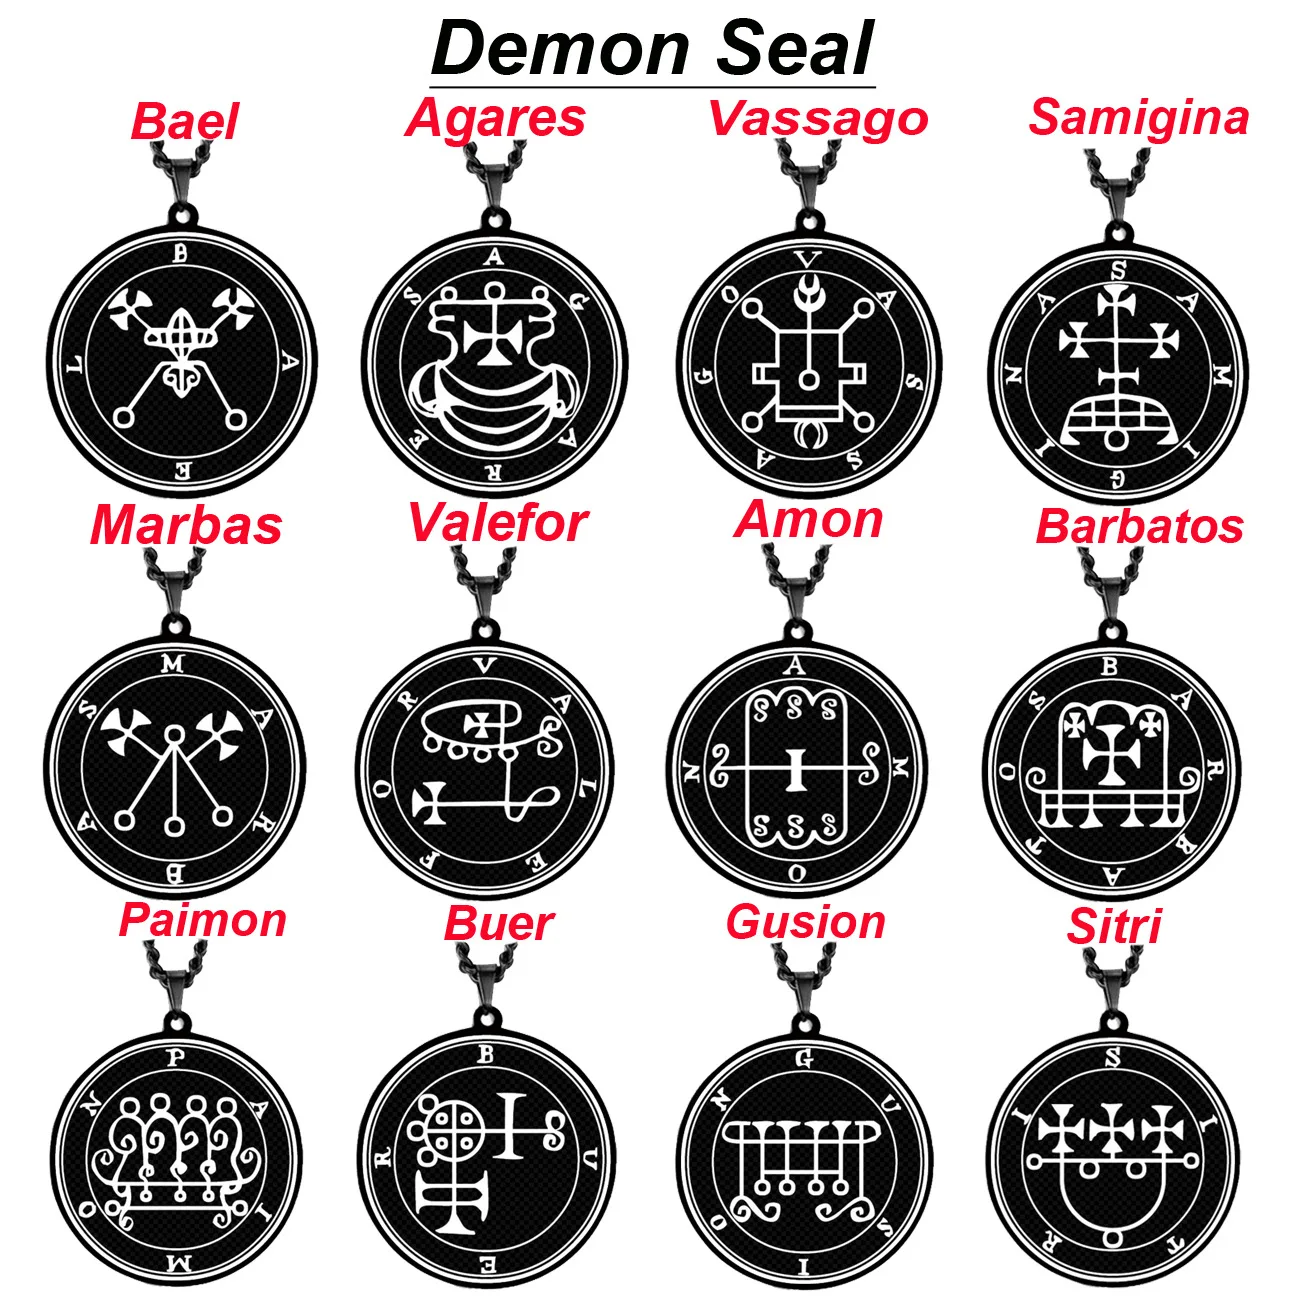 

Black Color King Asmoday Sigil Demon Origins Seal Lesser Key of Solomon Goetia Amulet Talisman Stainless Steel Pendant Necklace